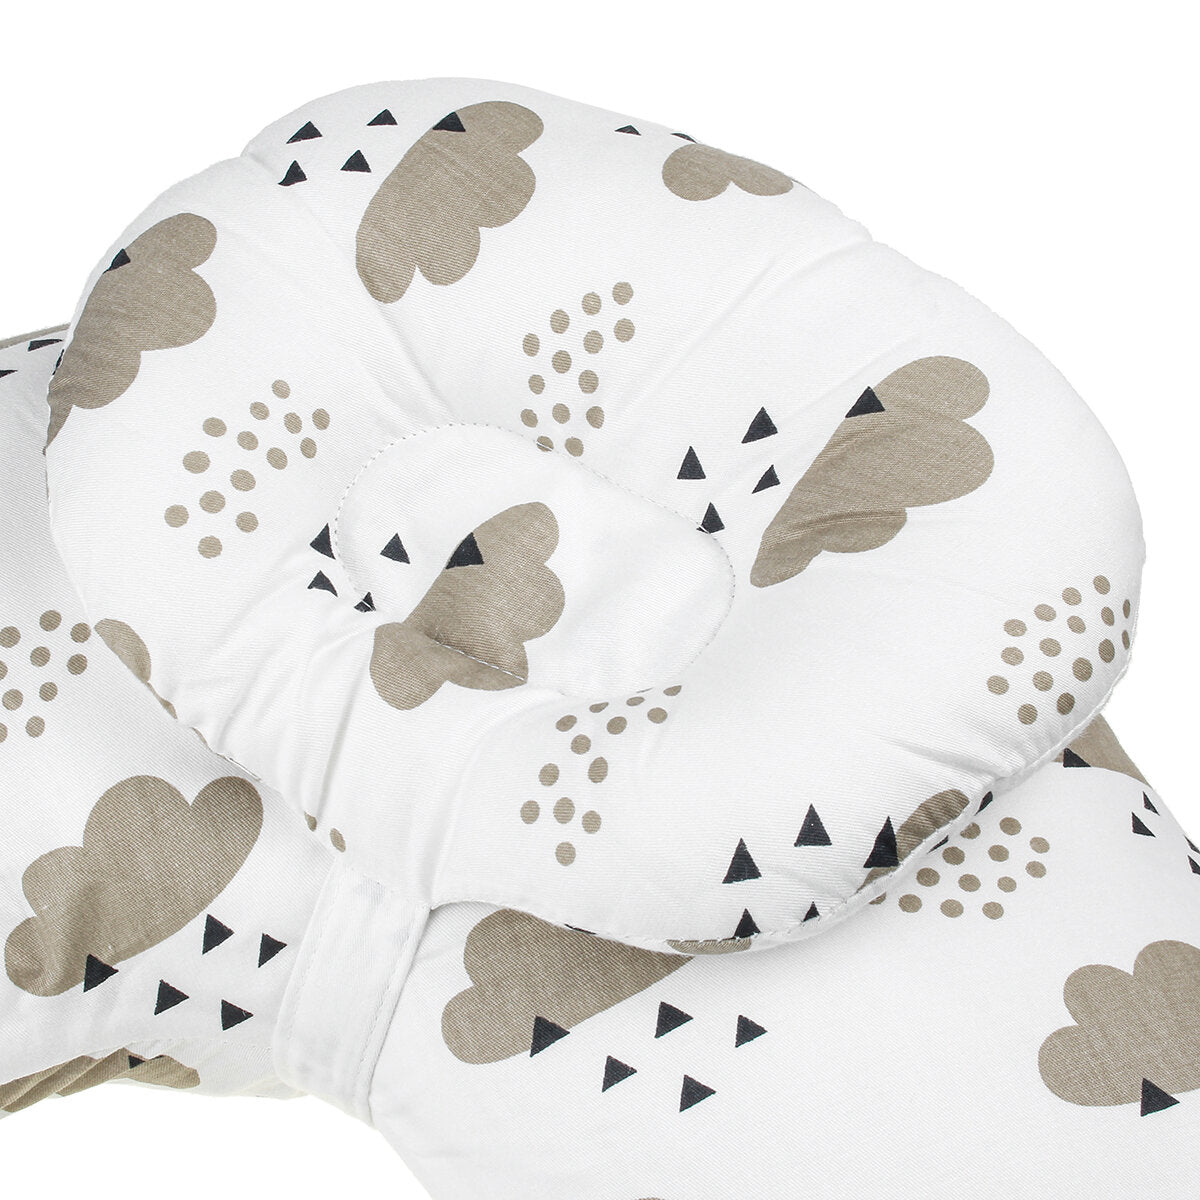 Baby Cot Pillows Newborn Infant Anti Flat Head Cushion Neck Anti Roll Support